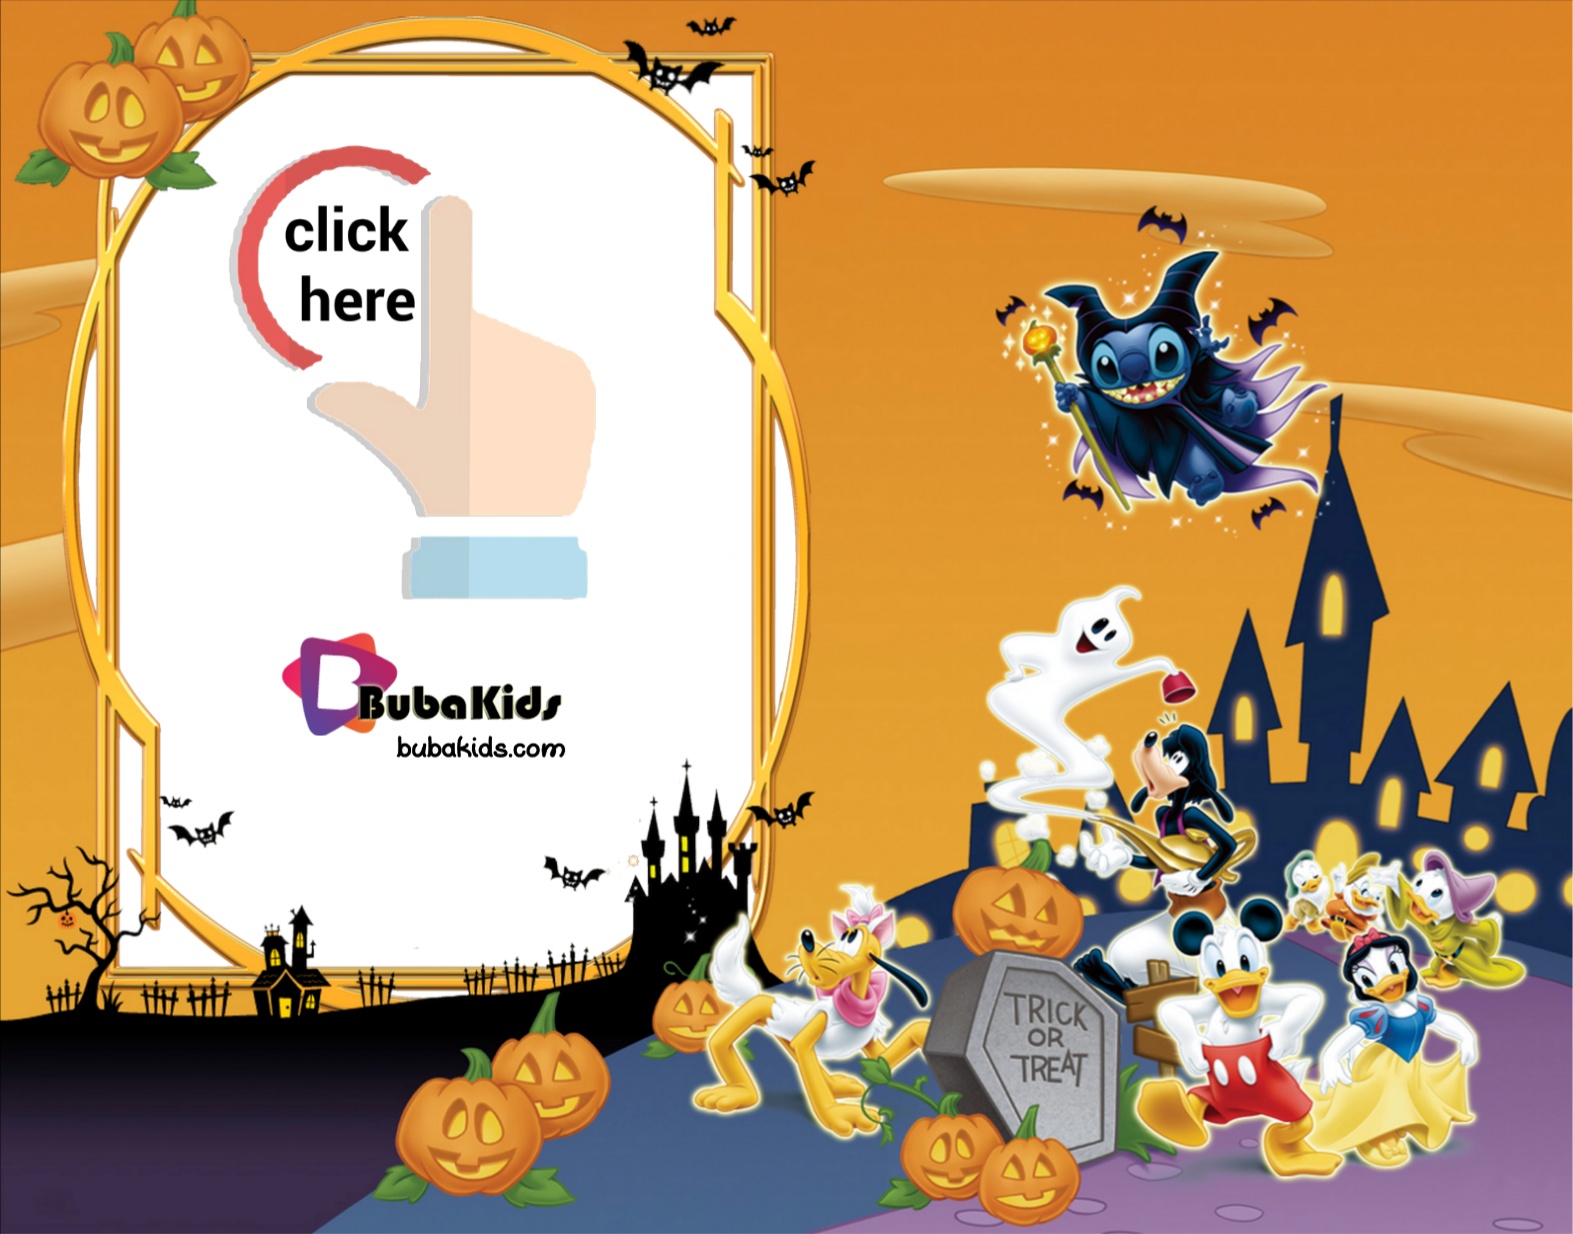 Donald duck and pluto disneys cartoon characters halloween invitation template free printable. Wallpaper